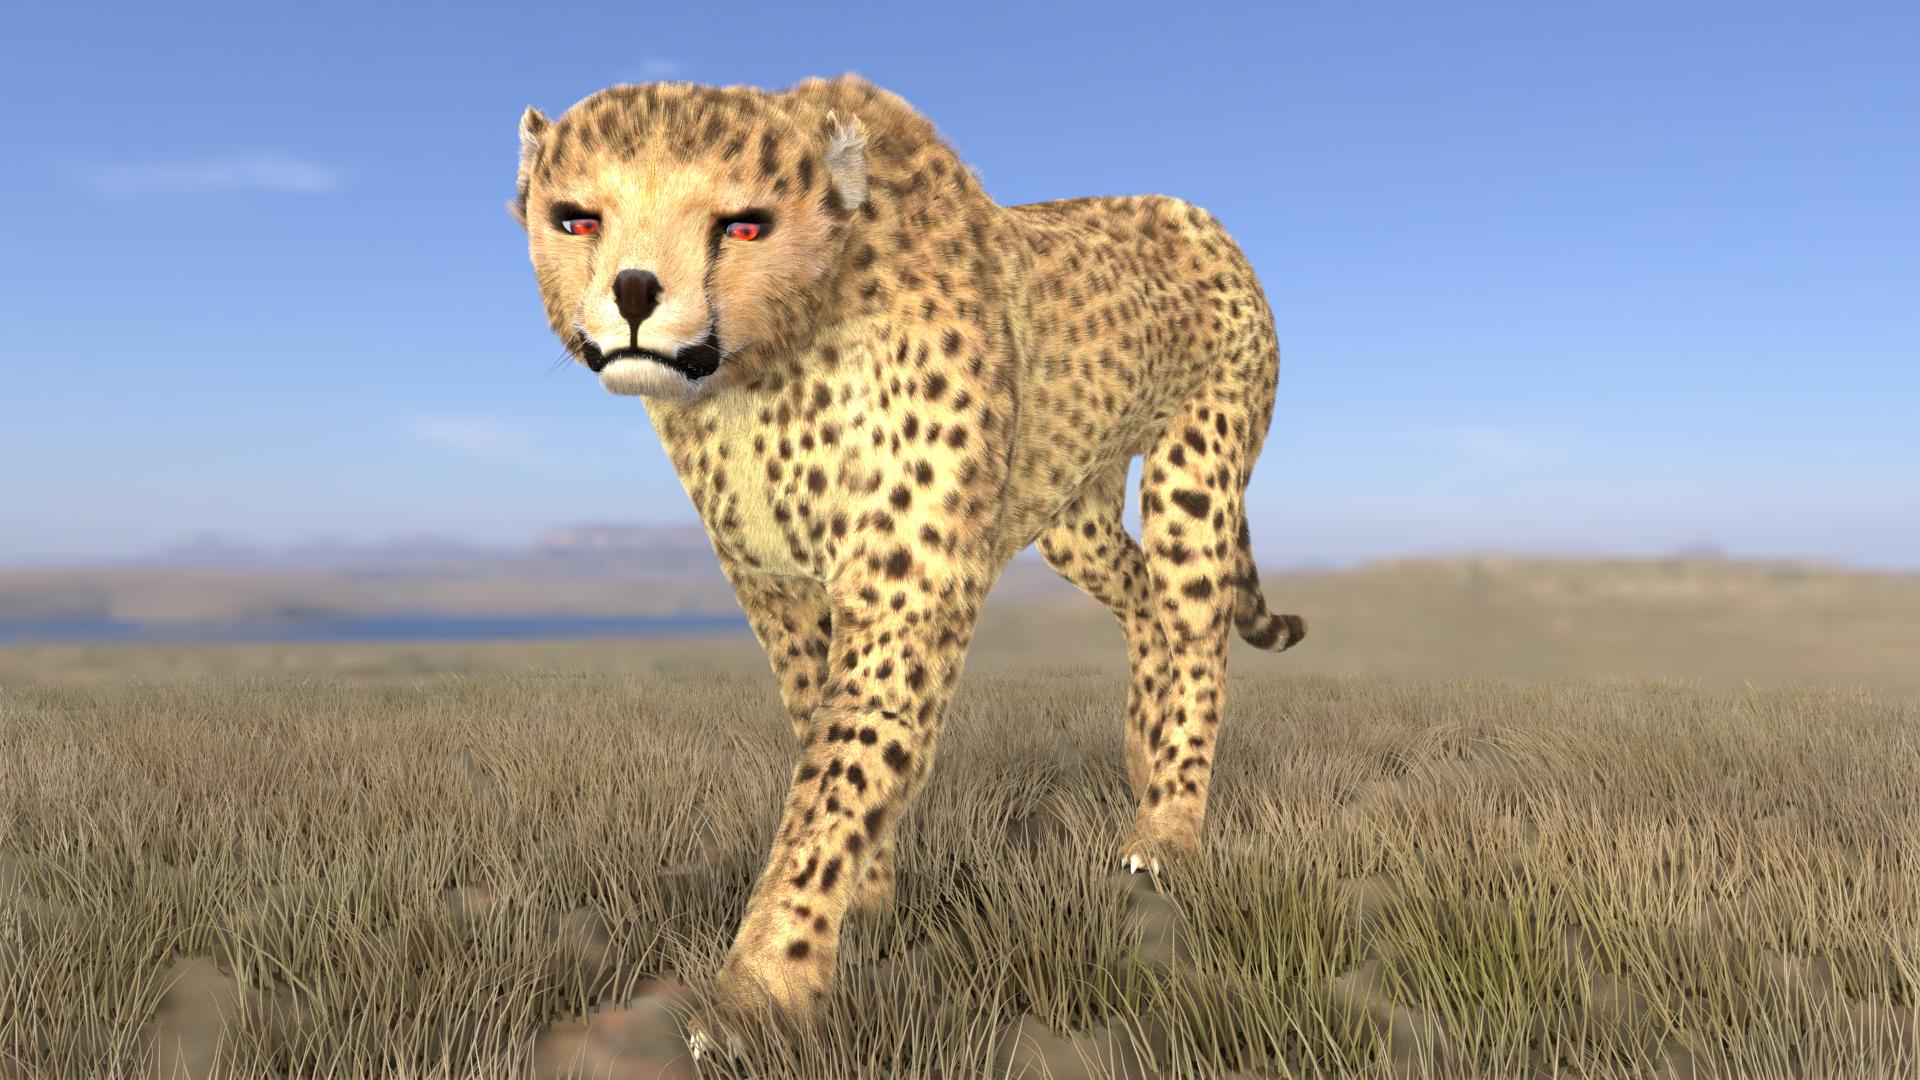 Cheetah preview image 1